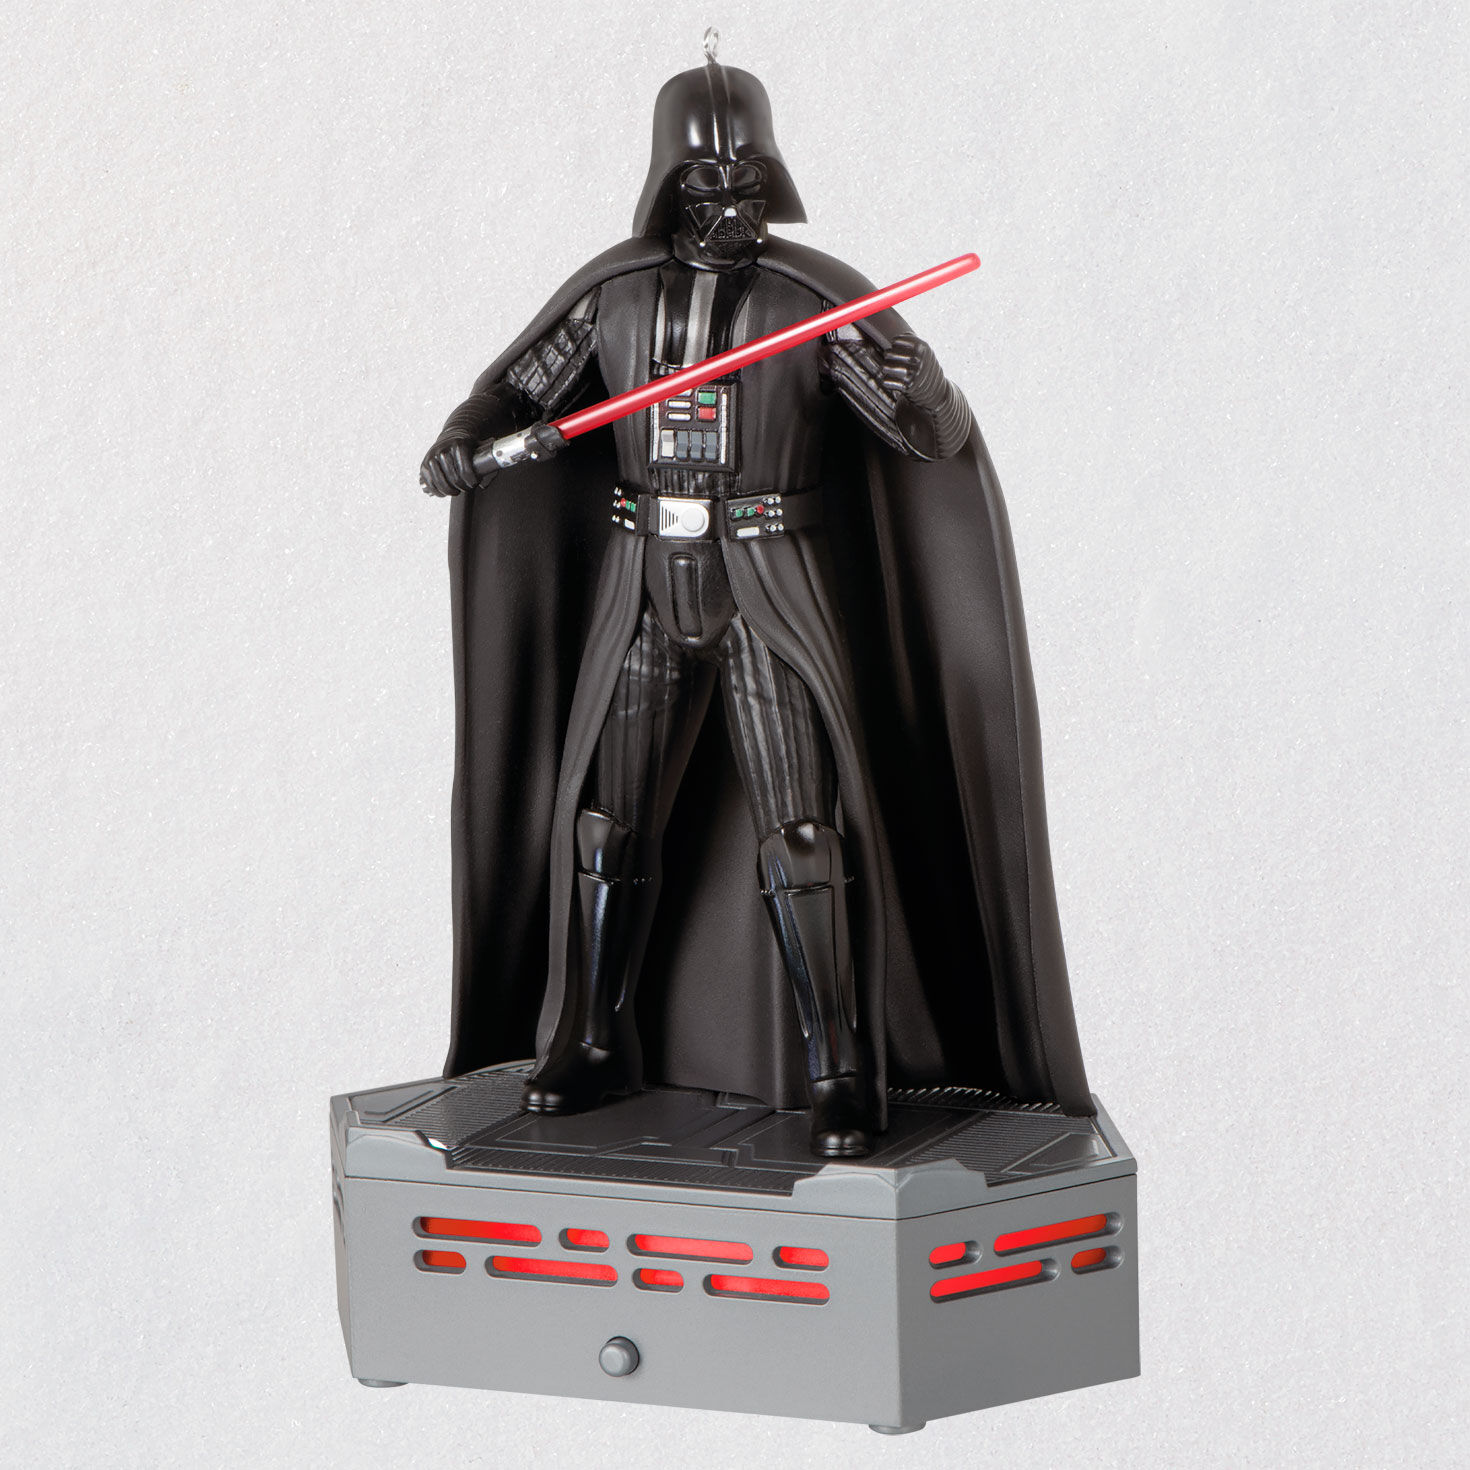 19 Hallmark Keepsake Ornament Star Wars a Hope Luke Skywalker 23rd in Series for sale online 